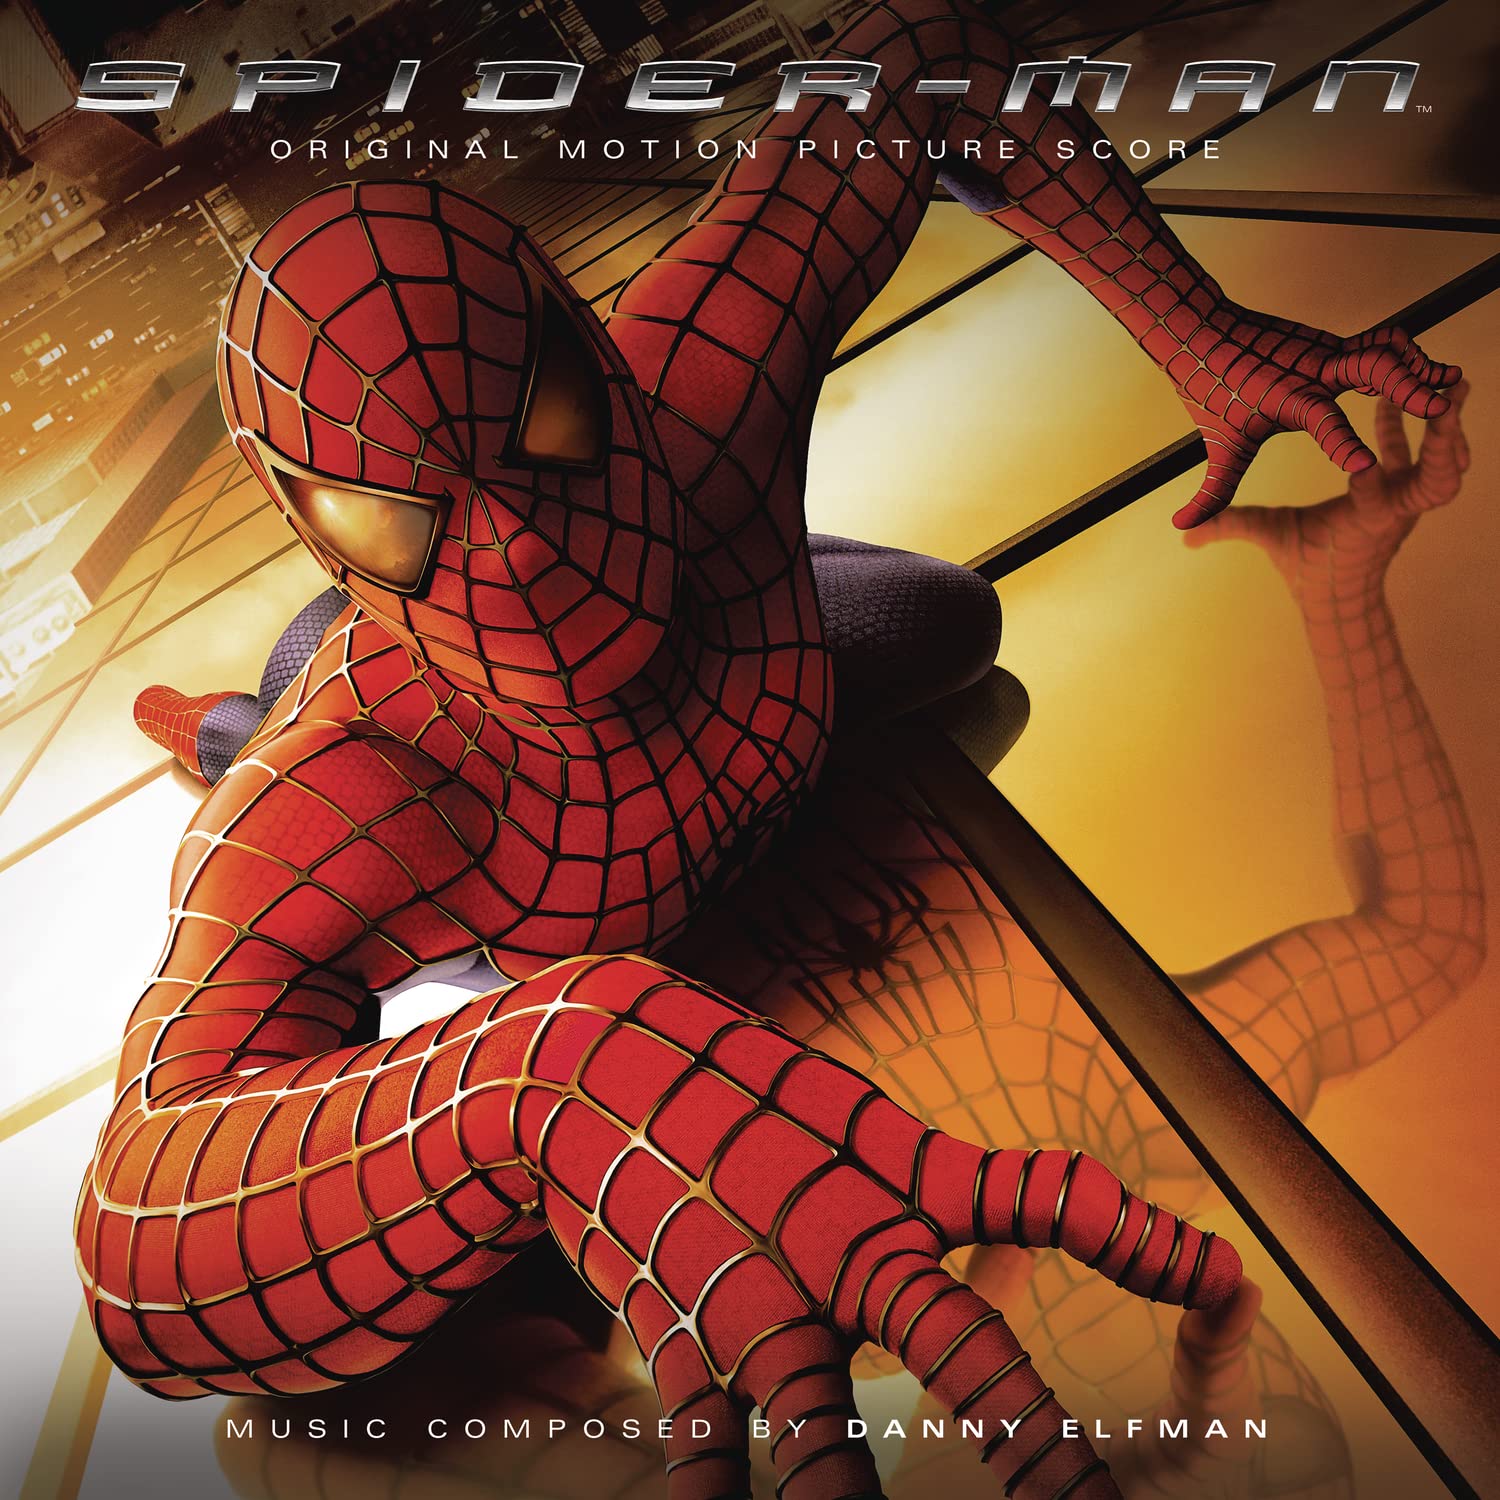 Саундтрек Sony Music Danny Elfman – Spider-Man (Original Motion Picture Score) (Limited Edition Silver Vinyl LP) диско bomba music зацепин александр 31 июня оригинальный саундтрек gold vinyl 2lp